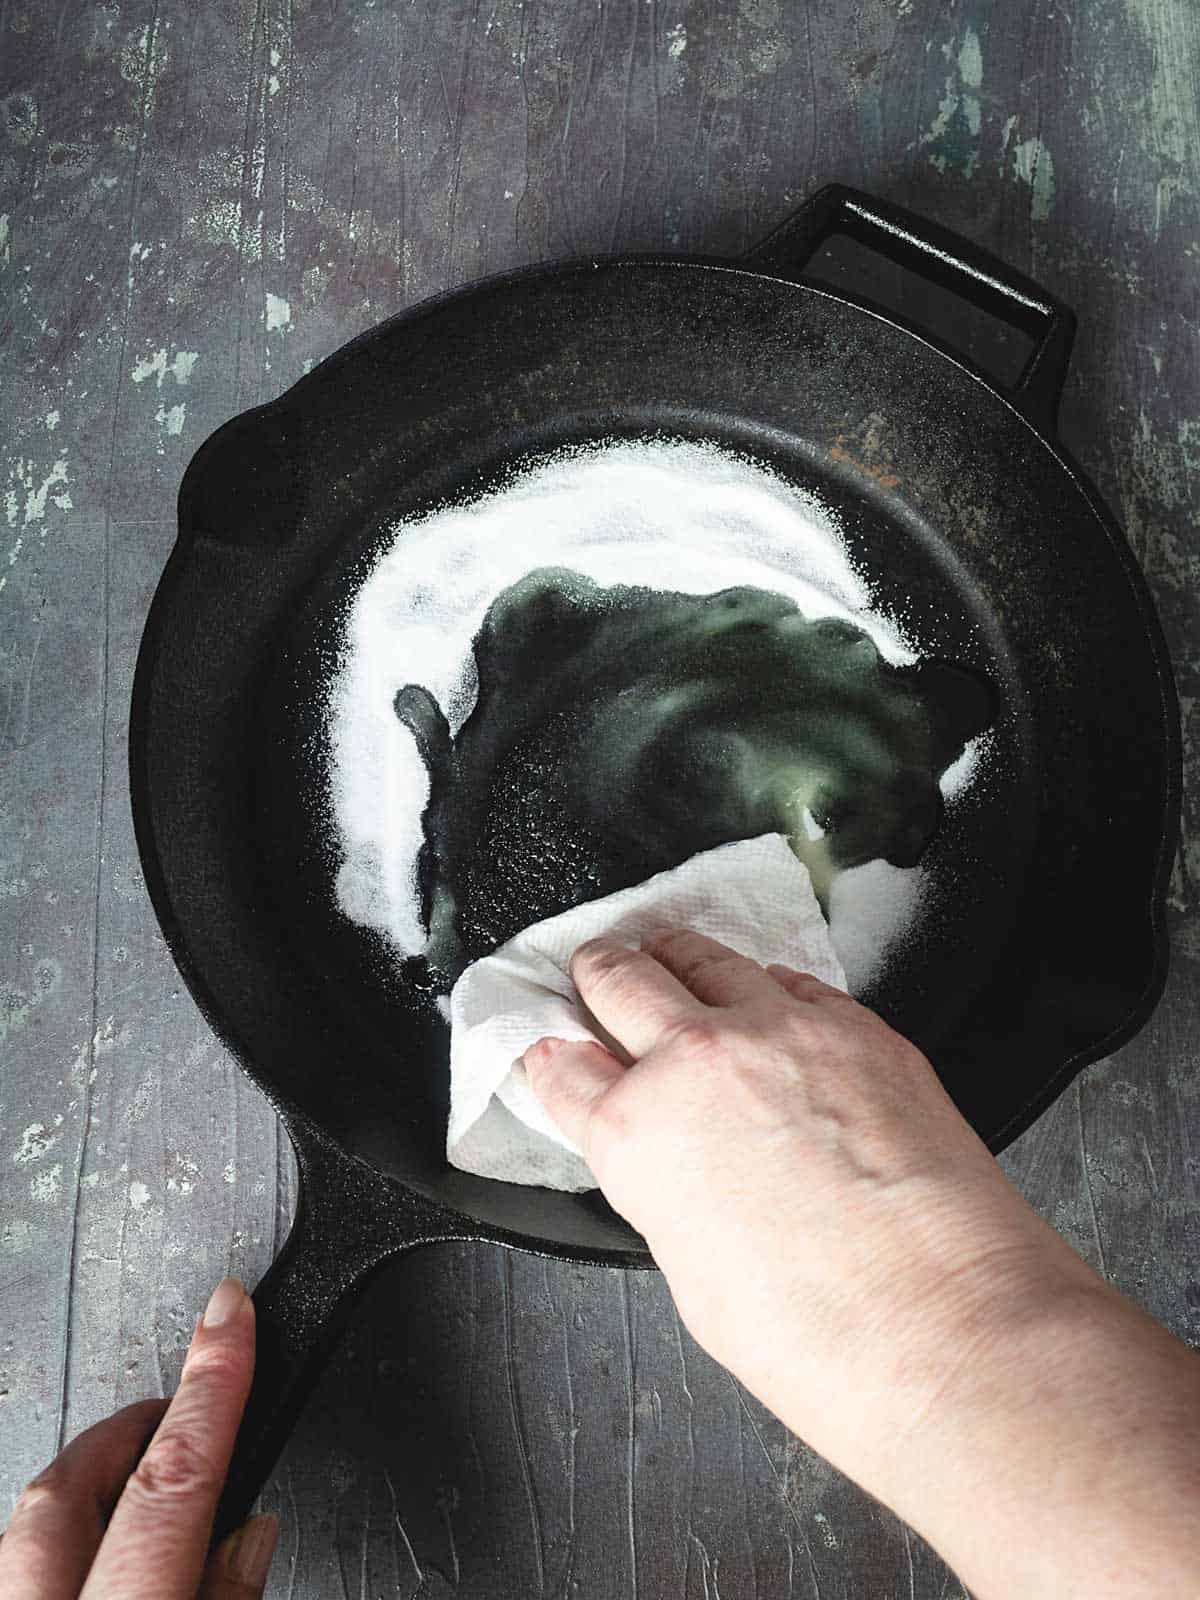 Rubbing salt onto the pan to remove rust.